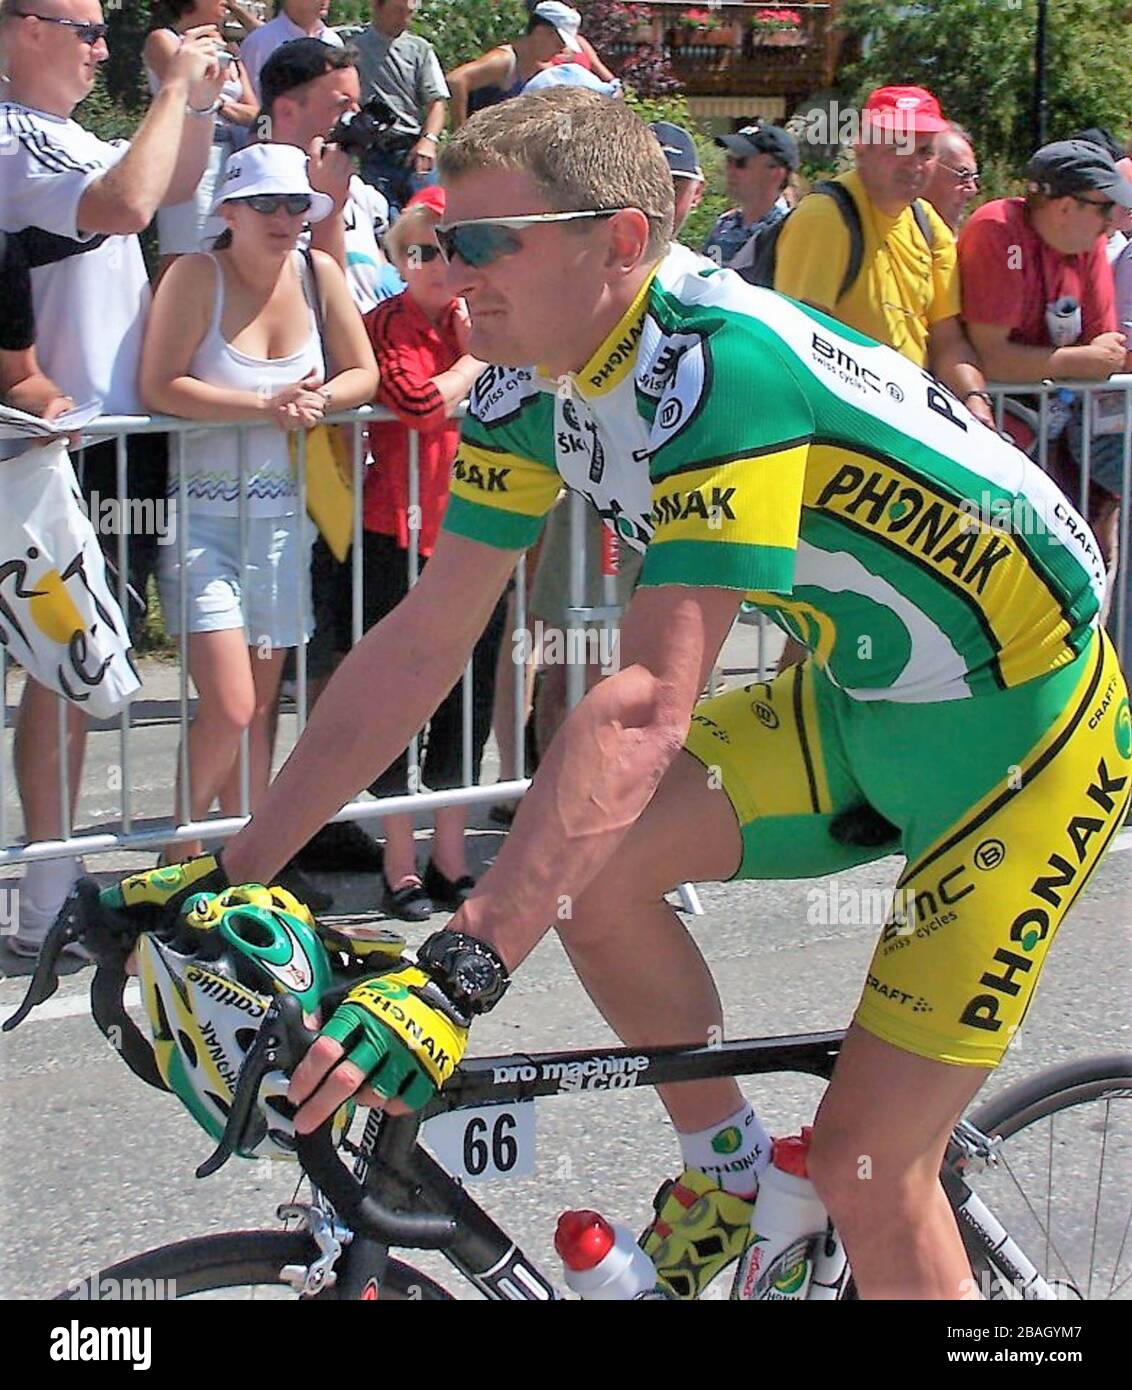 Floyd Landis de Phonak durante el Tour de Francia 2005, Etape 11 carrera ciclista, Courchevel - Briançon (192 km) el 11 JULIO de 2005 en Courchevel , Francia - Foto Laurent Lairys / DPPI Fotografía de stock - Alamy